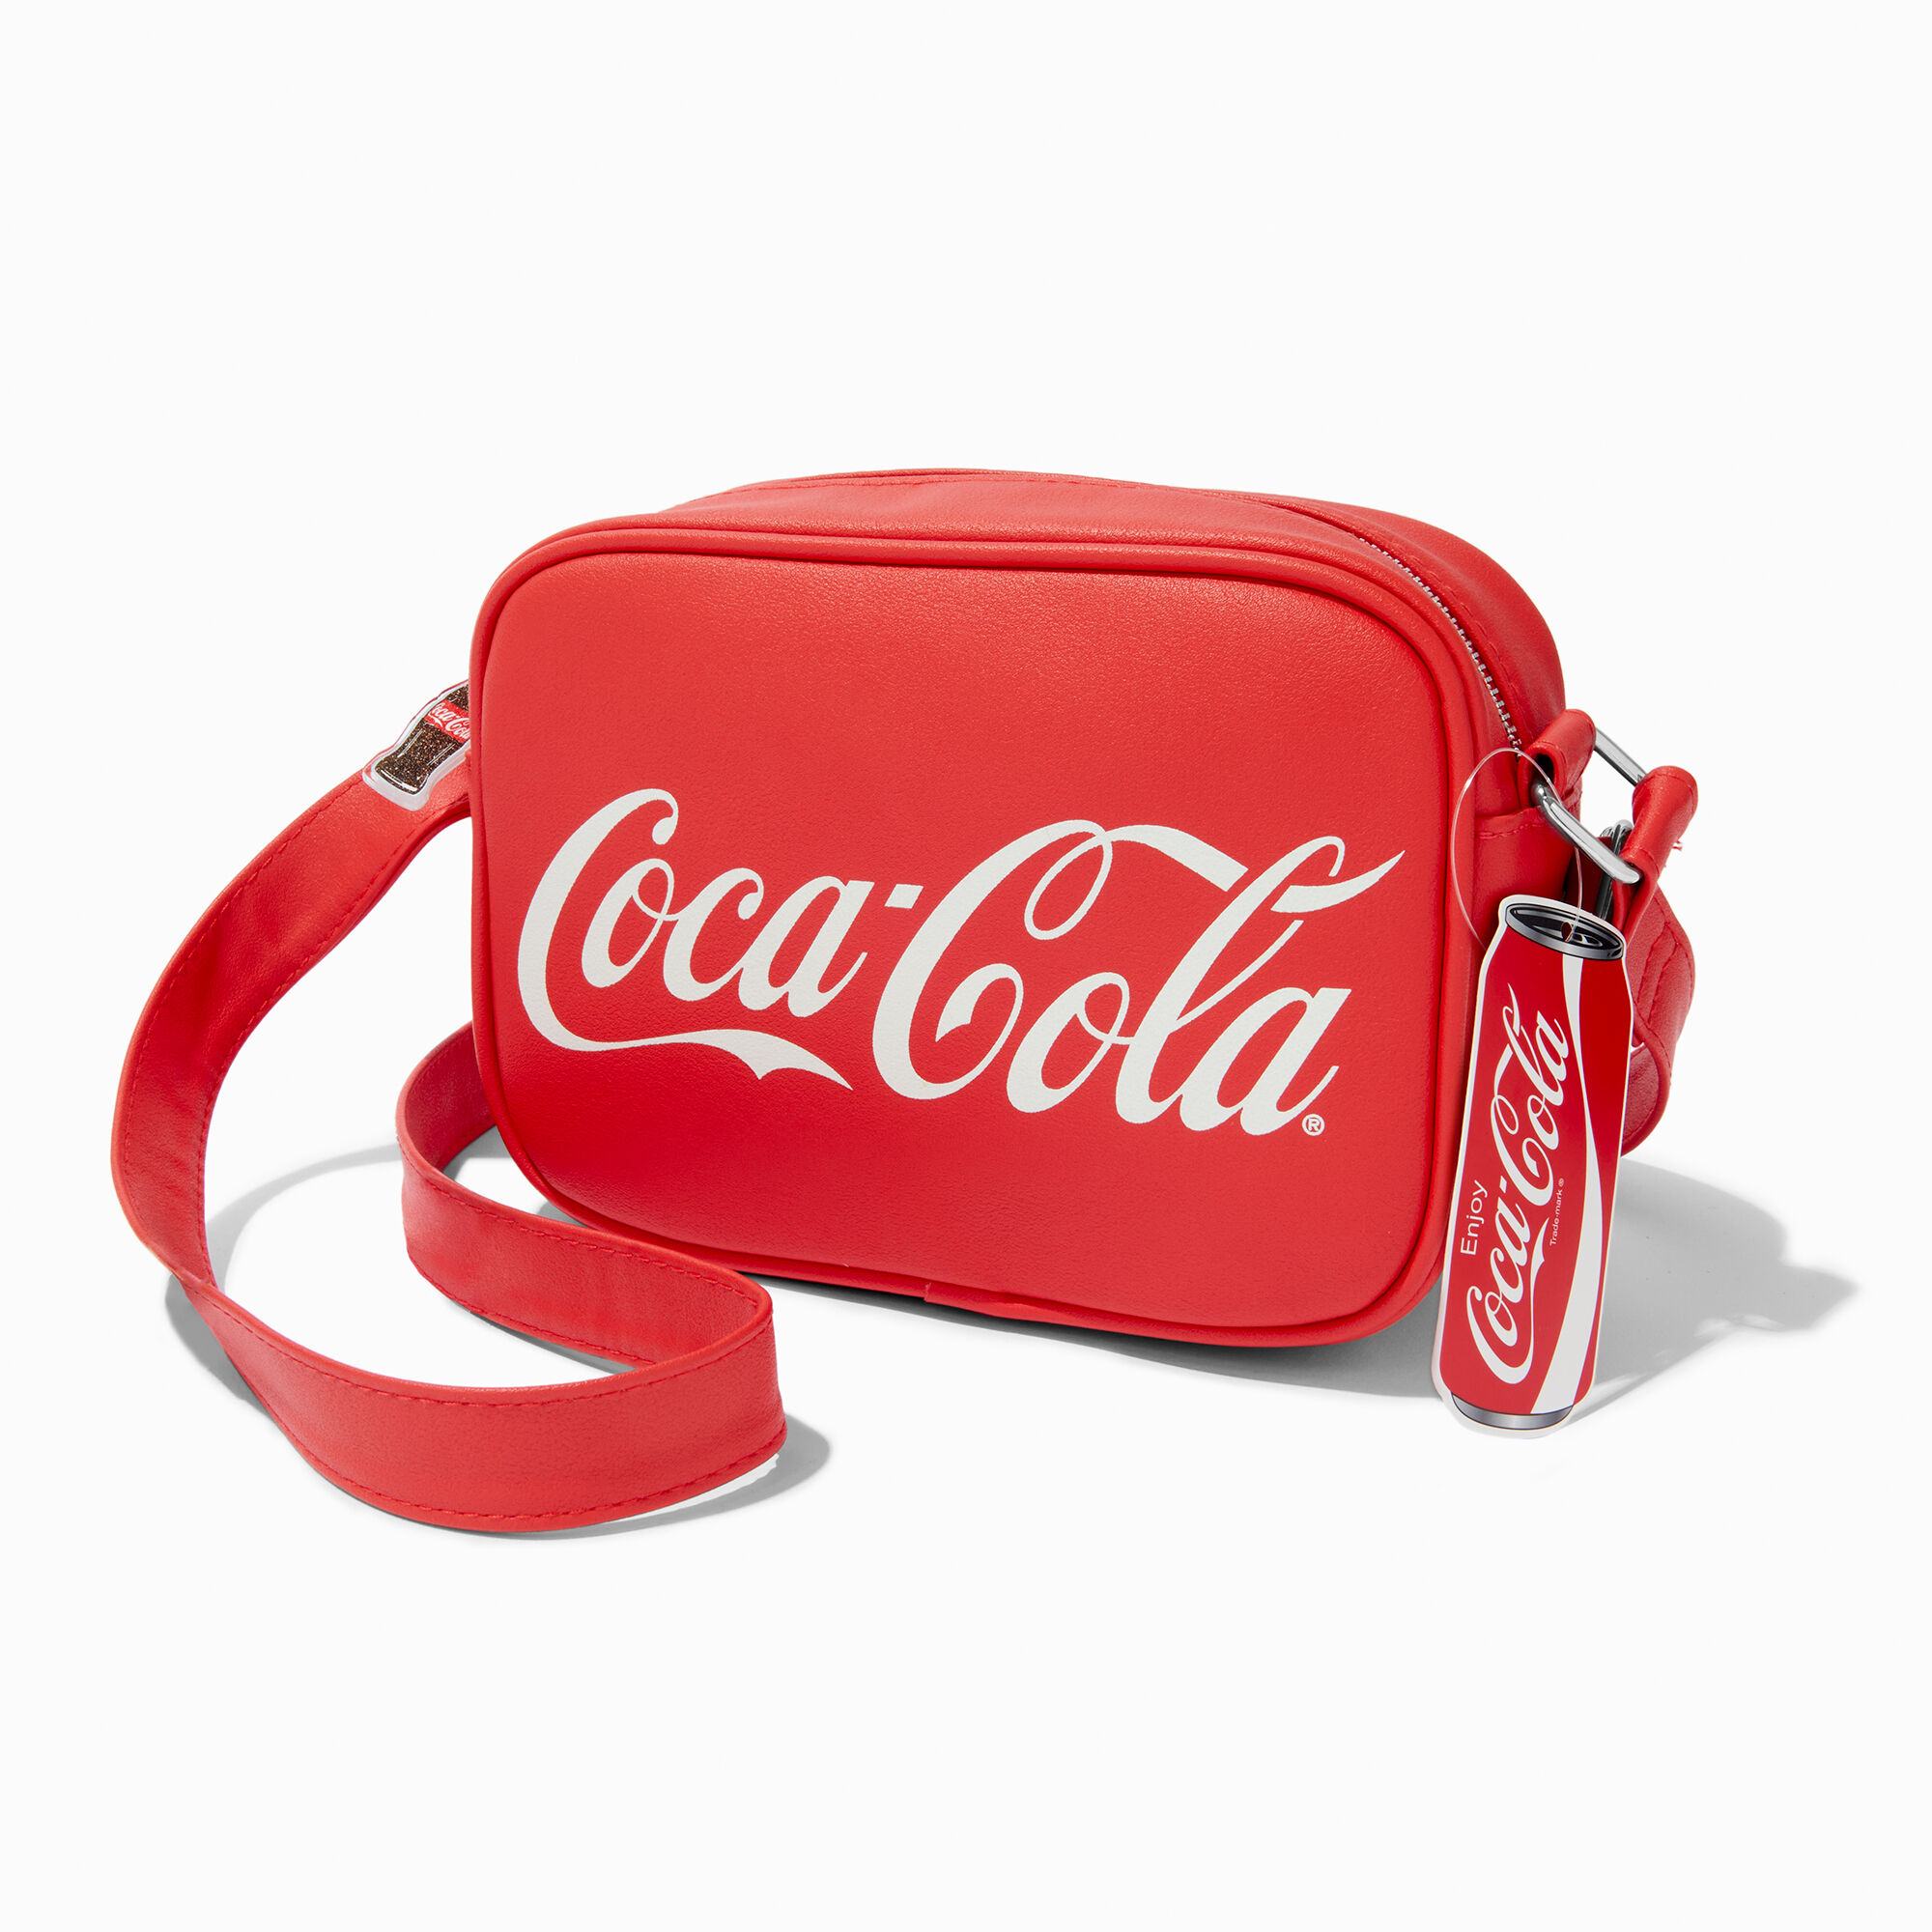 View Claires CocaCola Crossbody Bag information